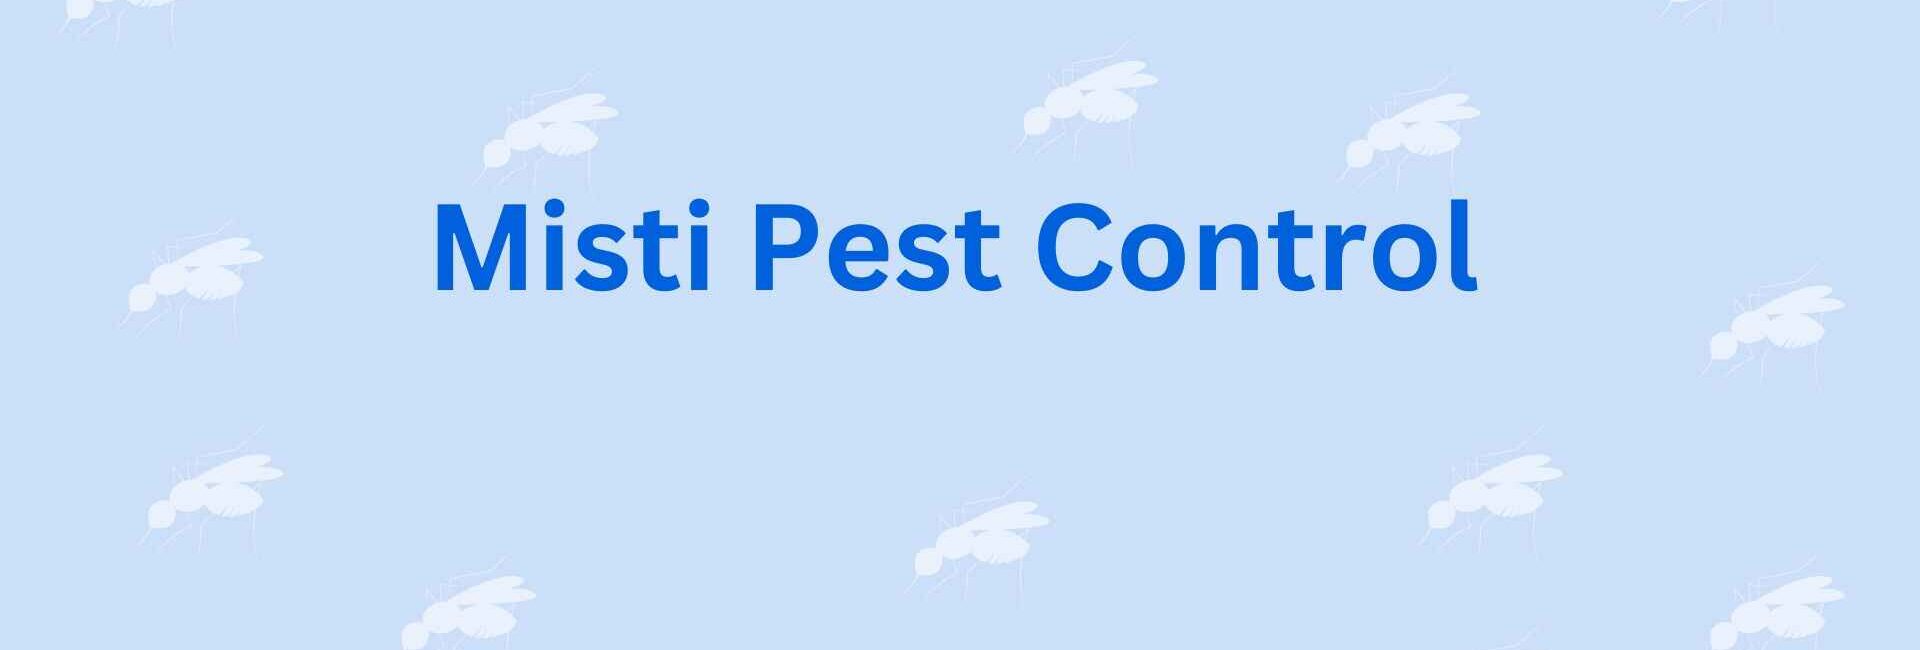 Misti Pest Control - Pest Control in Noida